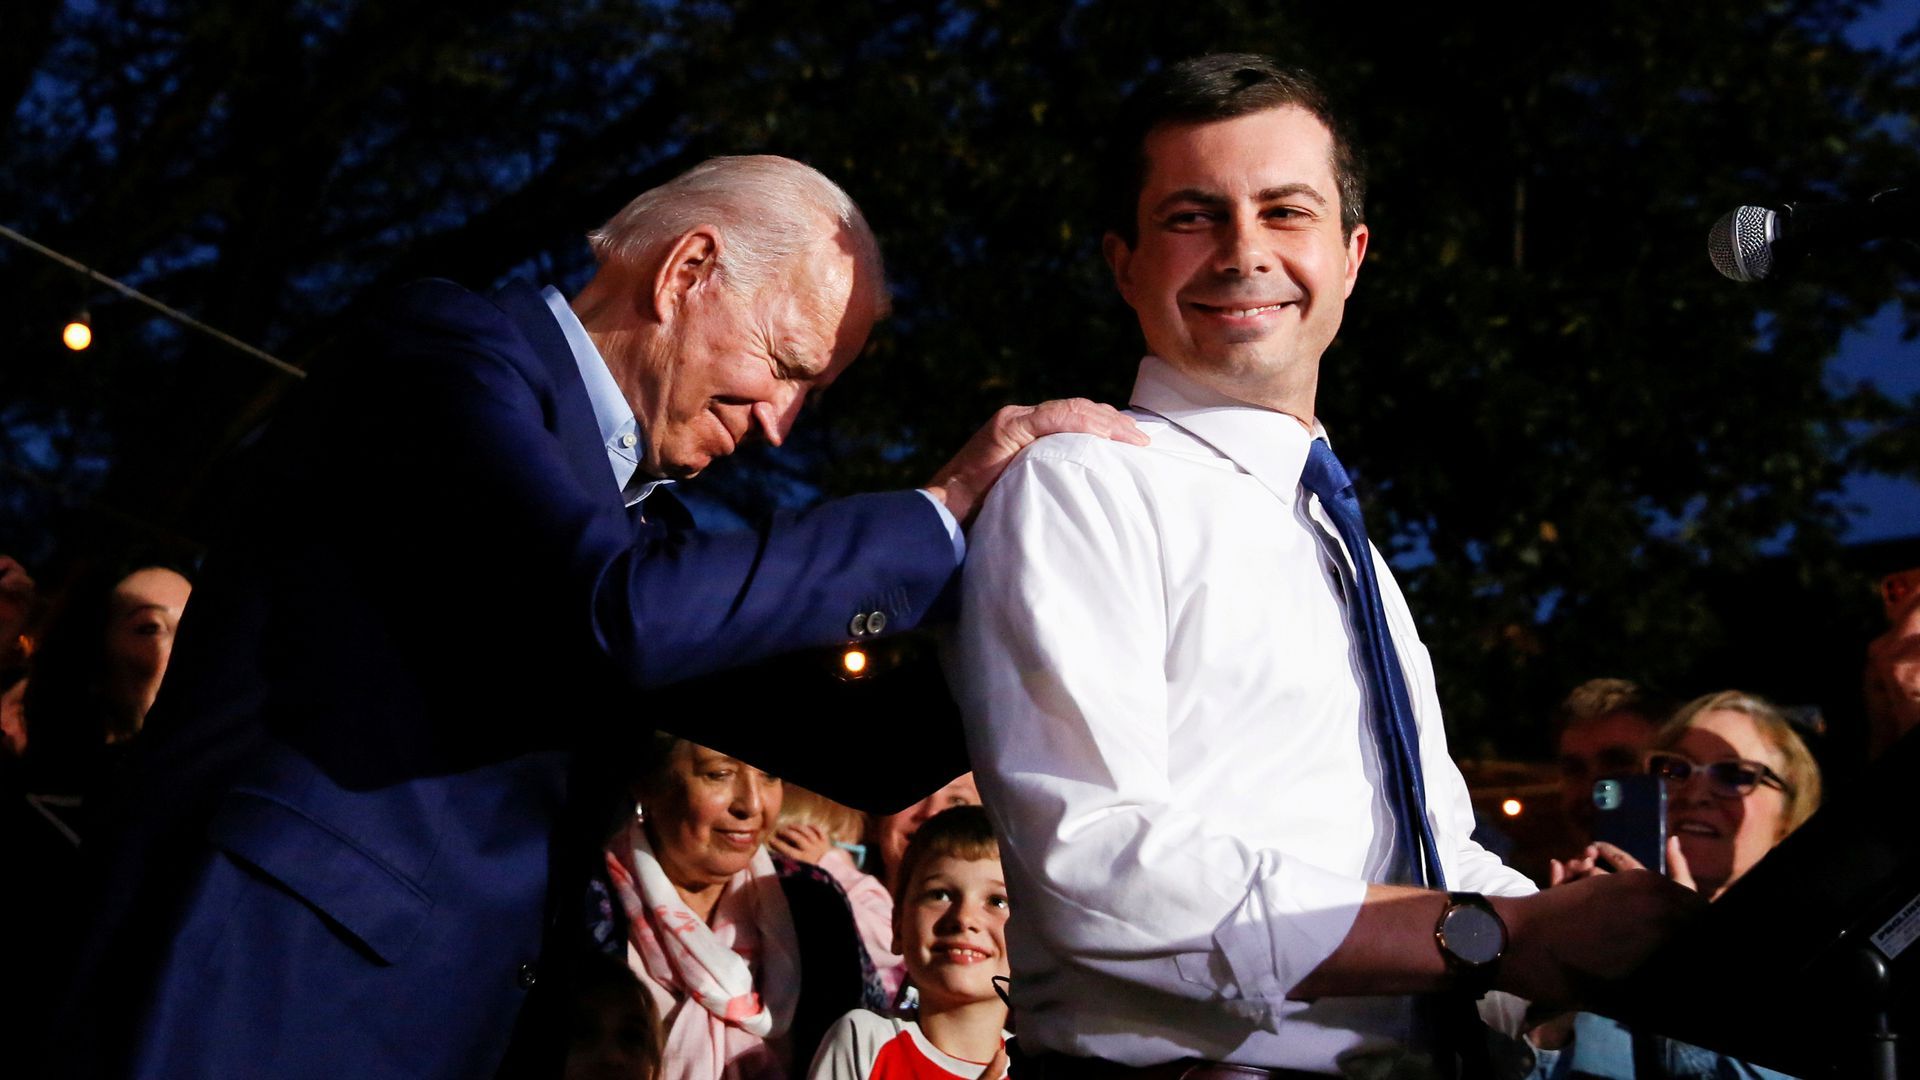 Joe Biden holds onto Pete Buttigeg's shoulders, as both men smile in front of a crowd.